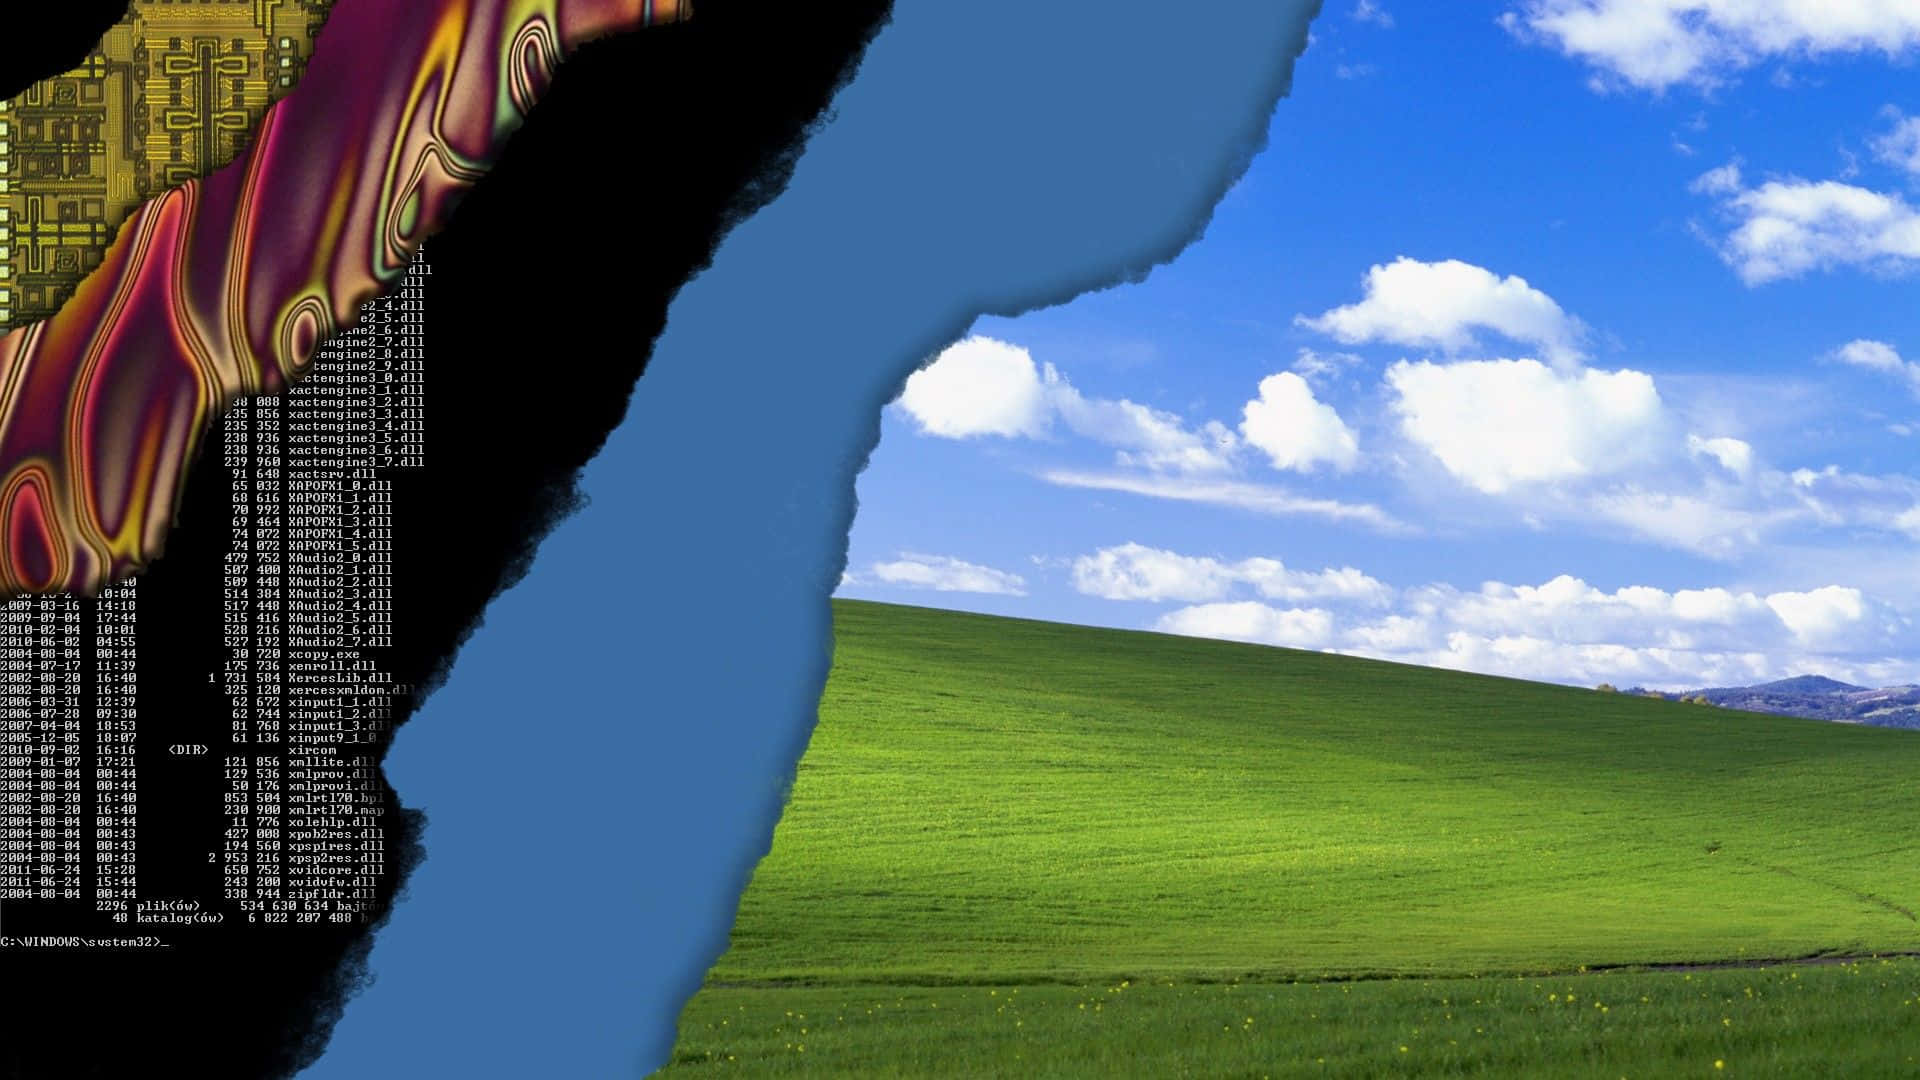 Classic Bliss: Windows Xp's Iconic Wallpaper